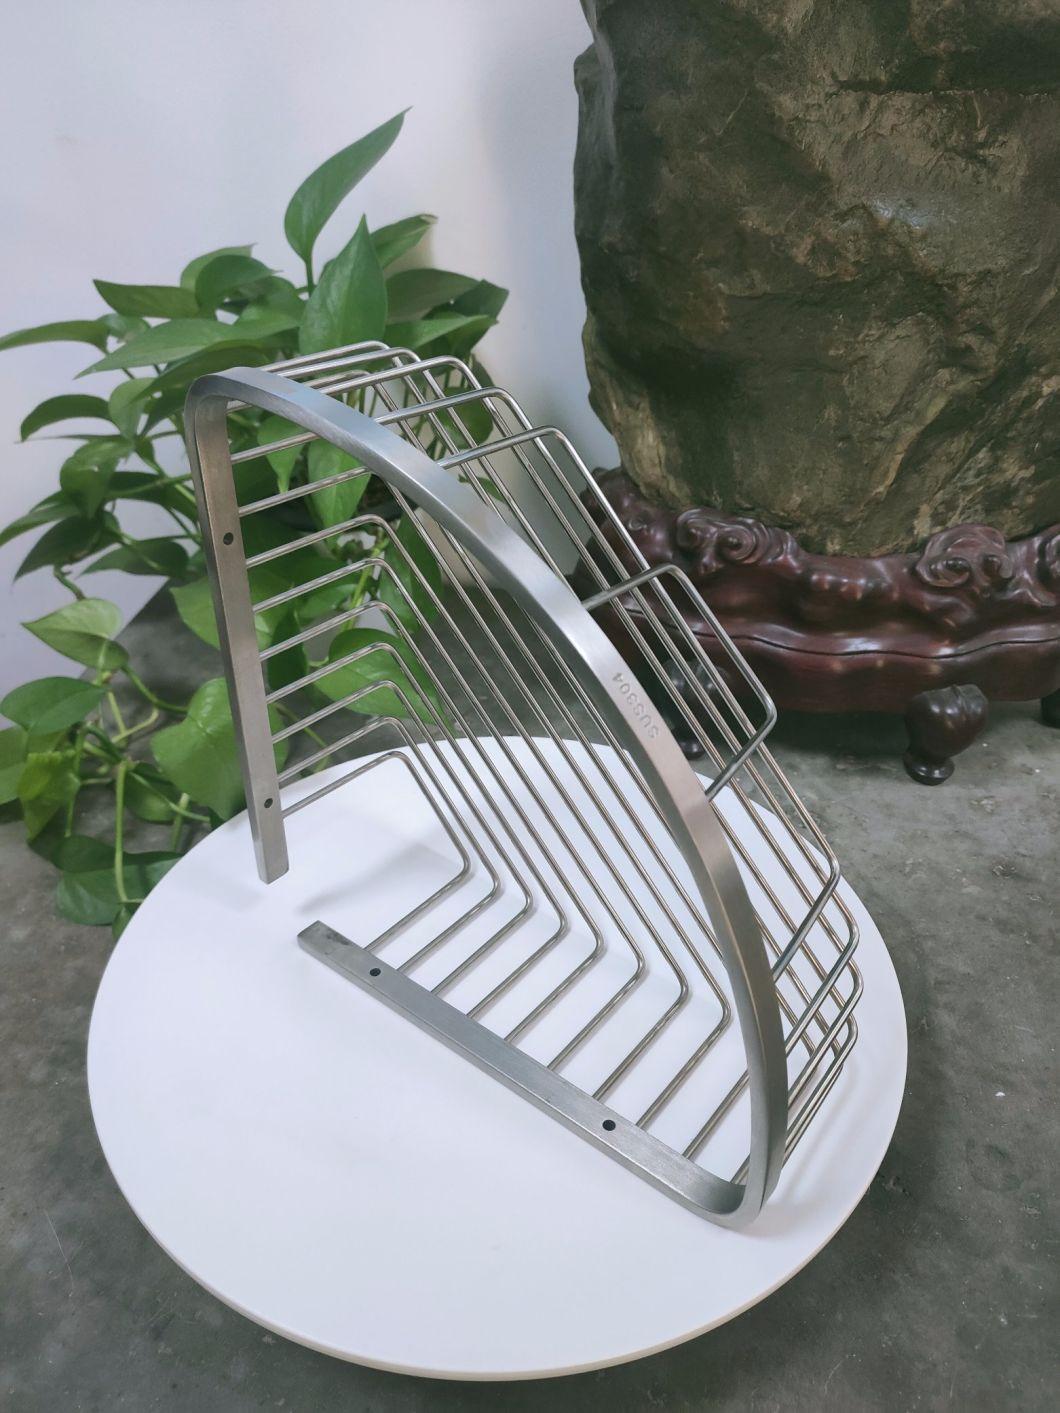 High Quality Stainless Steel Corner Basket for Bathroom & kitchen